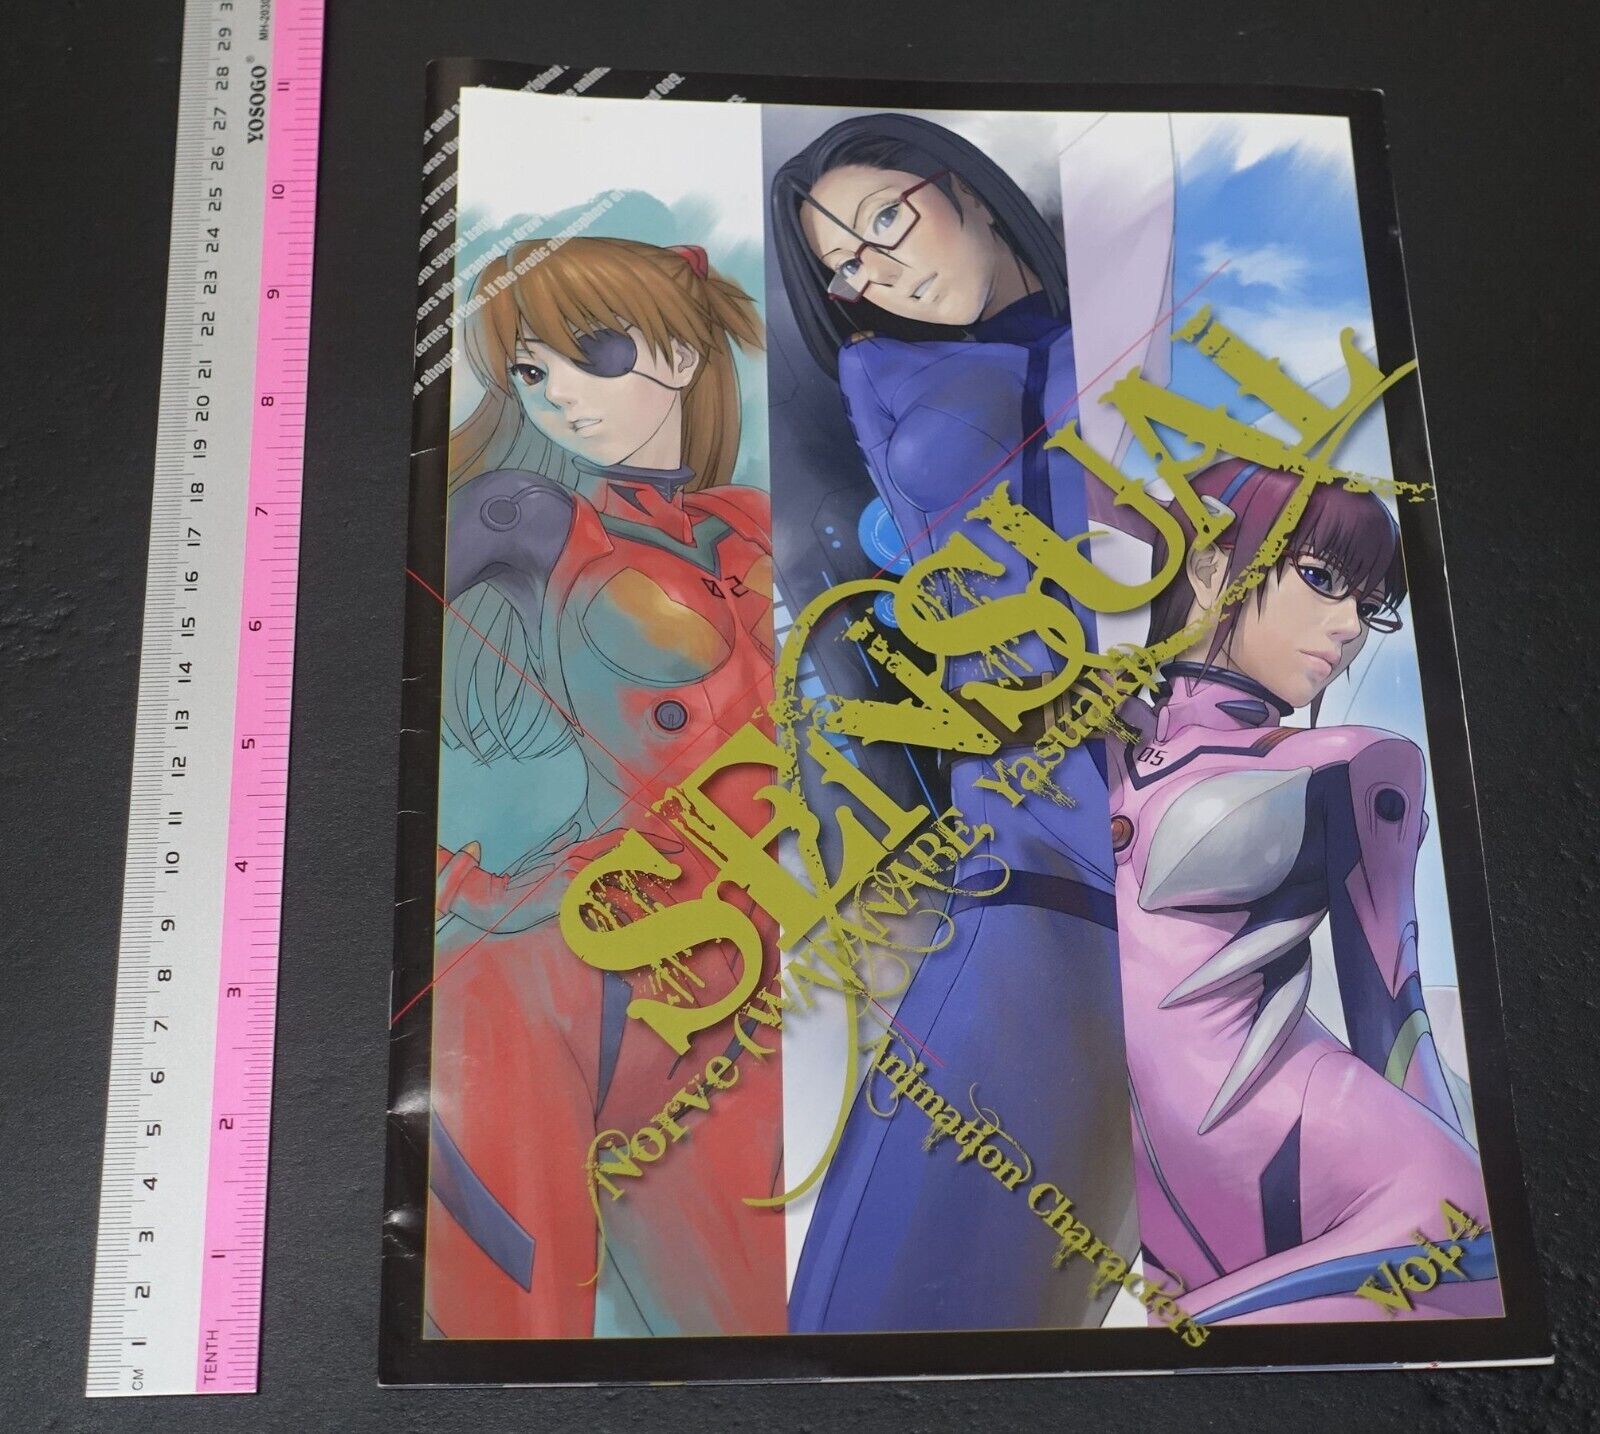 Castlism Fan Art Book YAMATO 2199 & Evangelion SENSUAL vol.4 